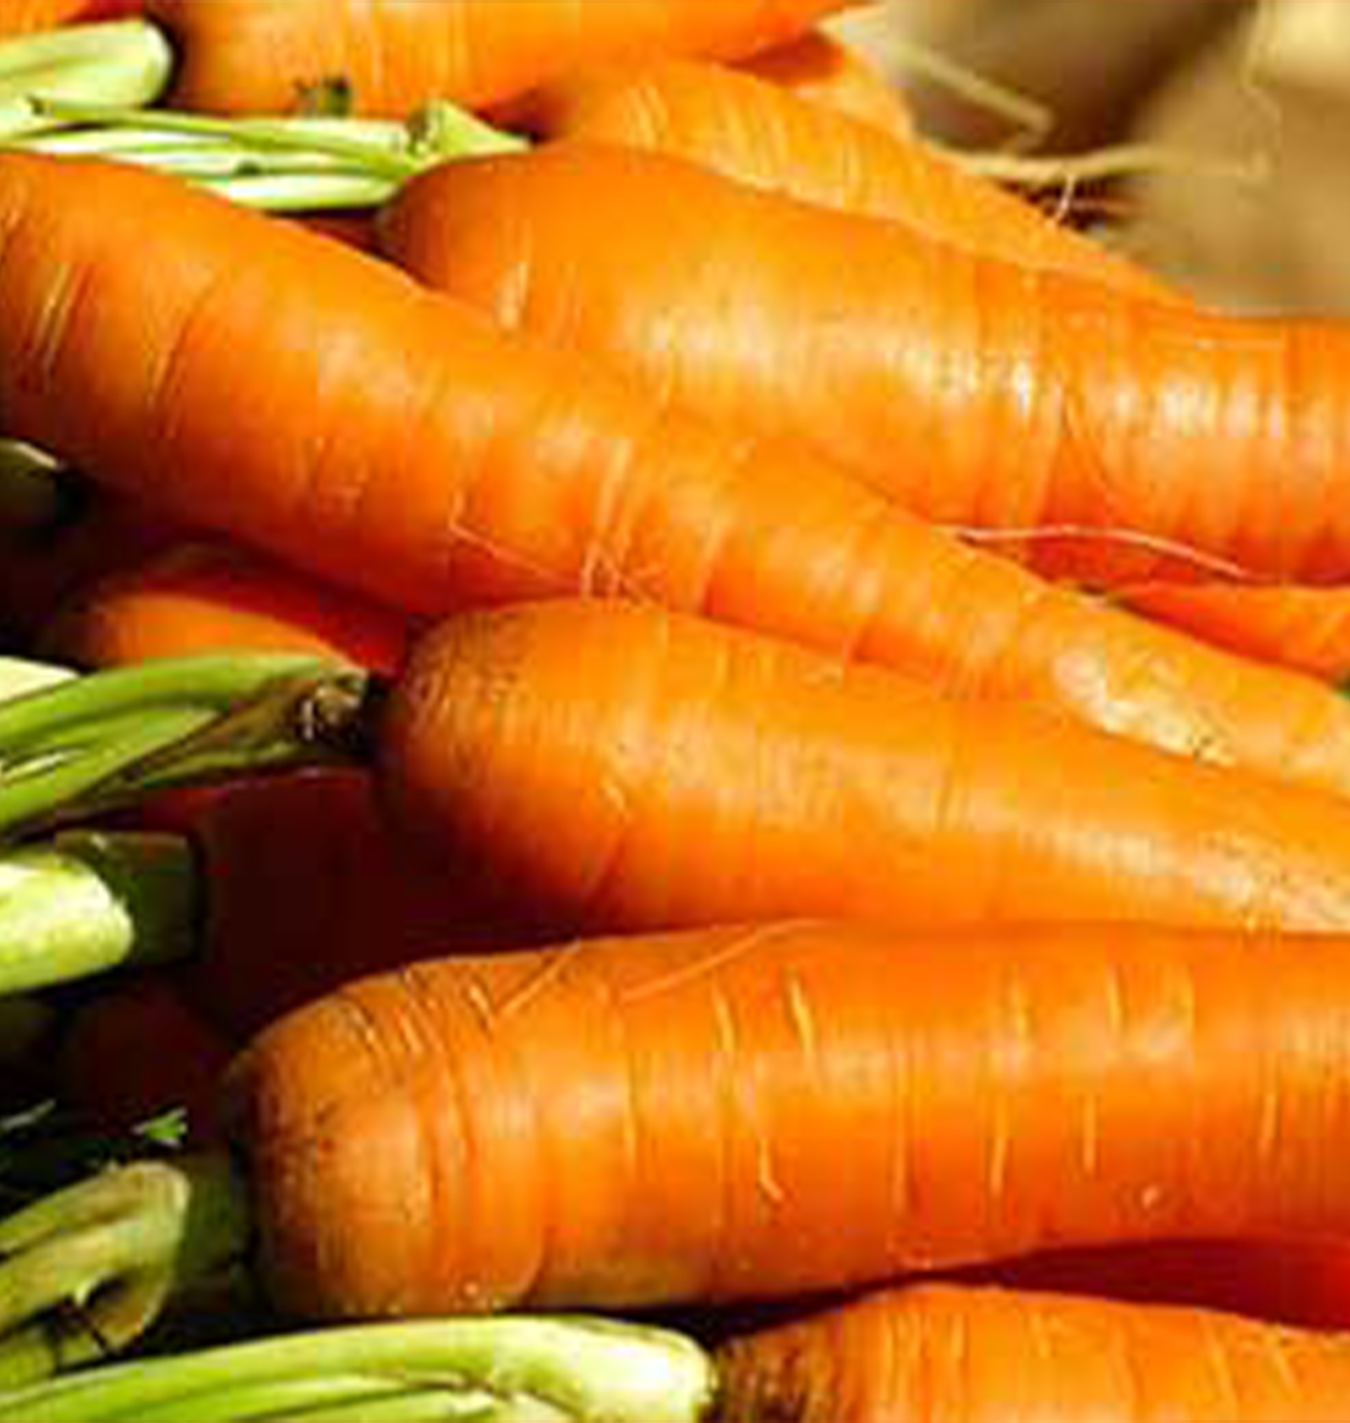 Growing Bugs Bunny Sized Carrots